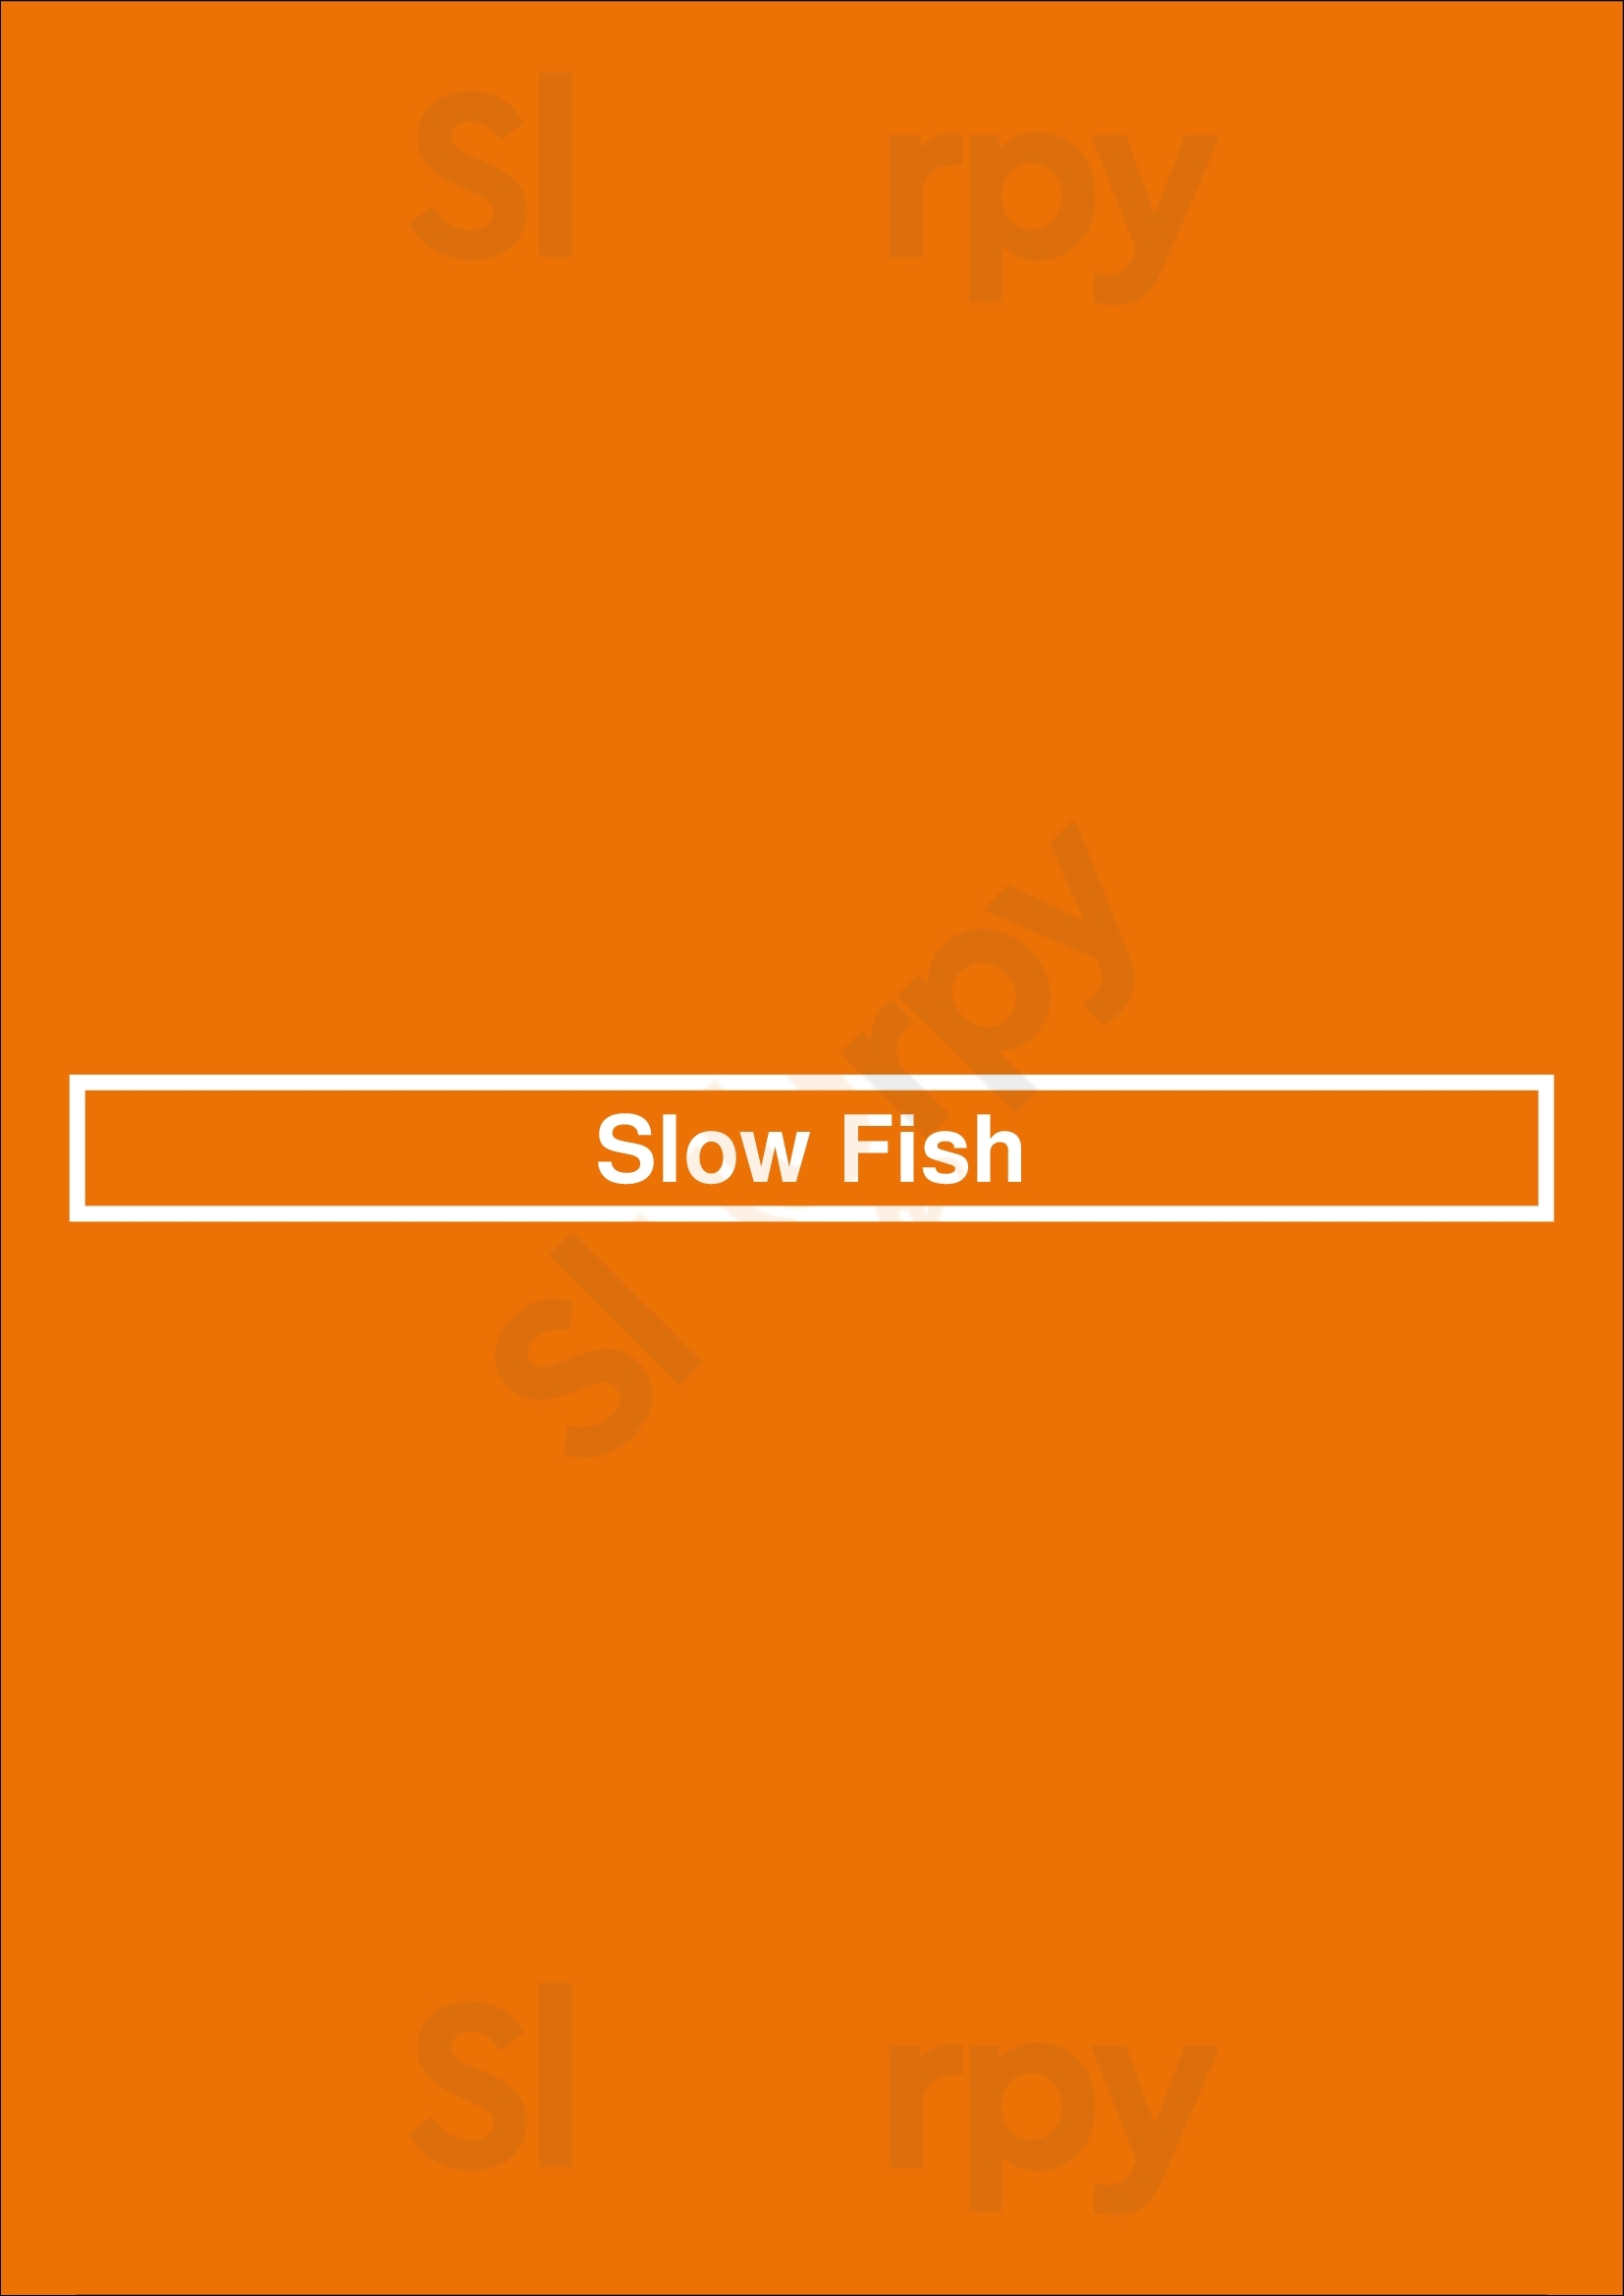 Slow Fish Huntington Beach Menu - 1